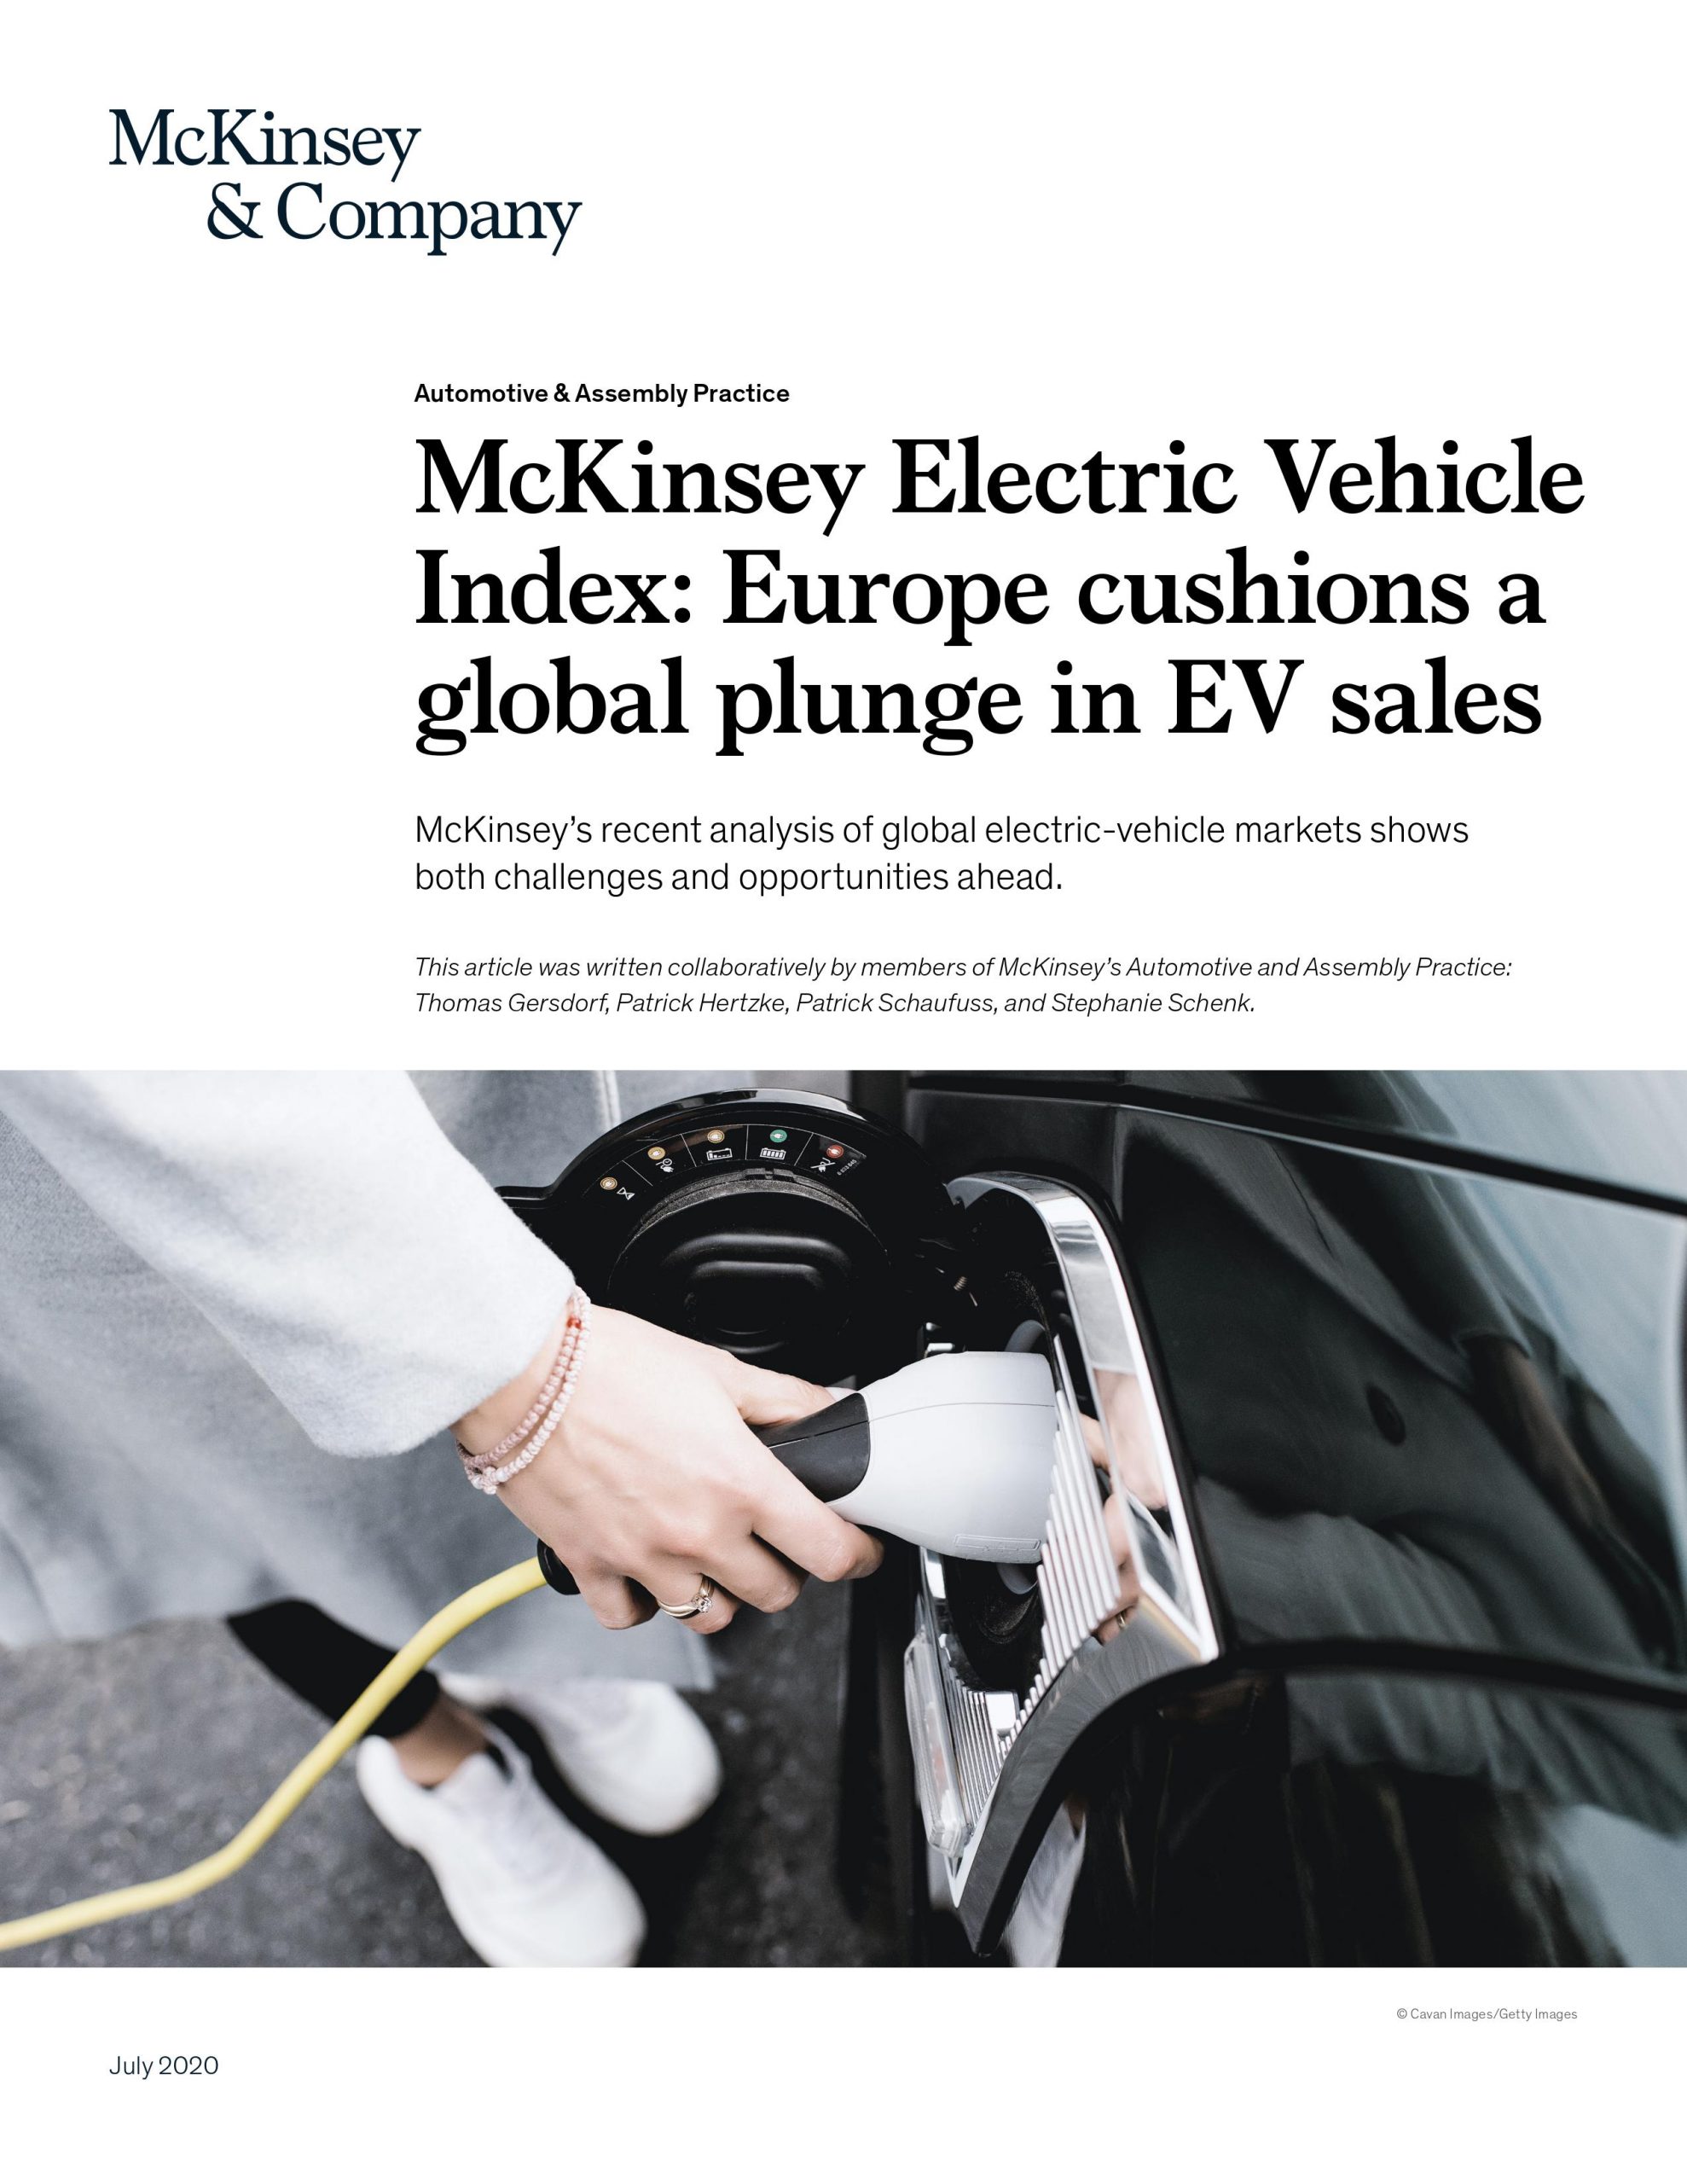 McKinsey Electric Vehicle Index